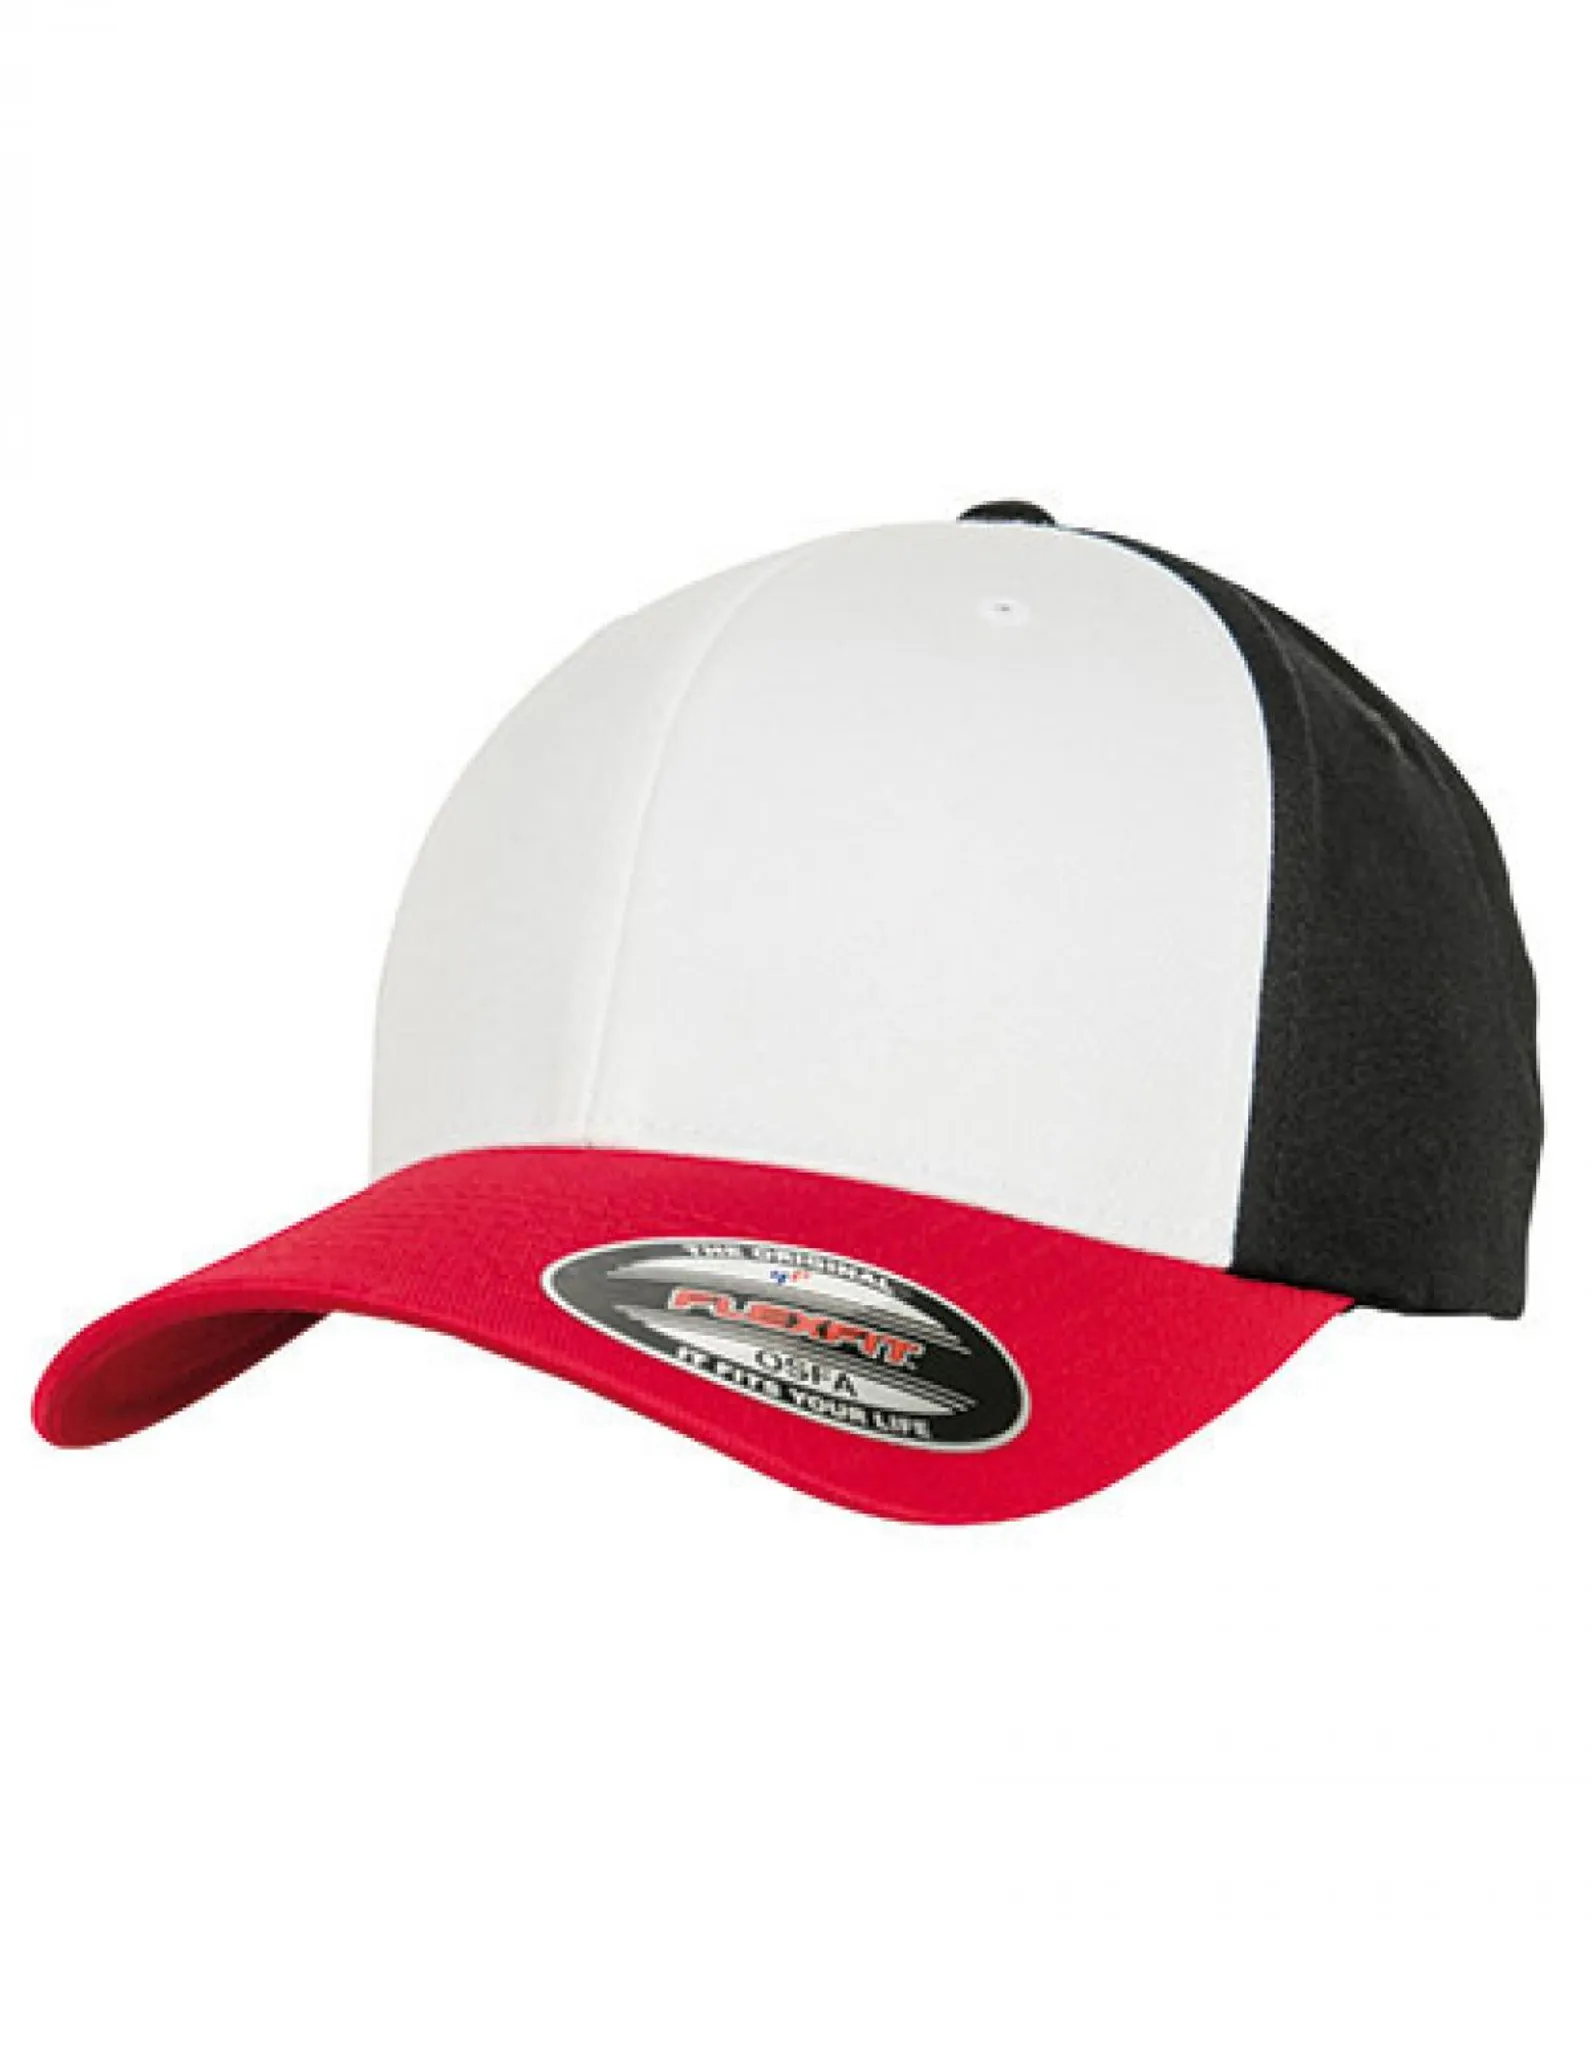 3-Tone Flexfit Red/White/Black Cap Farbe: 